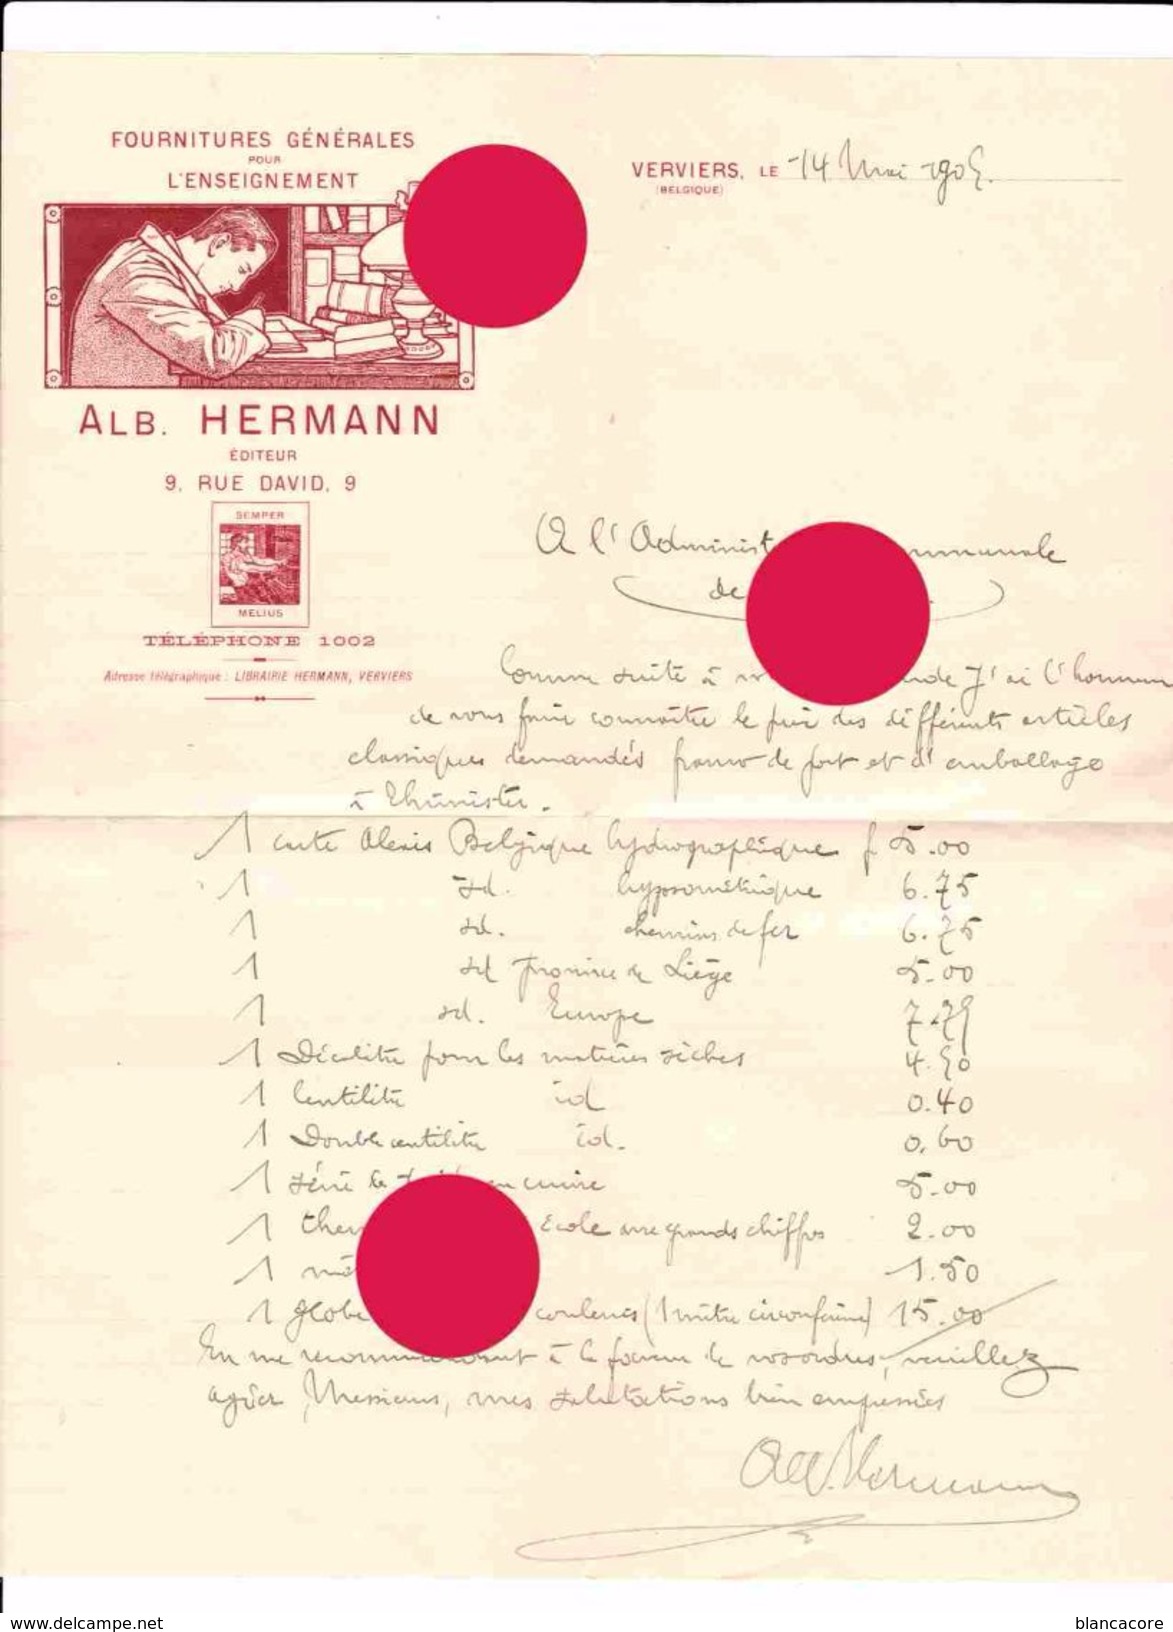 VERVIERS 1905 ALBERT HERMANN éditeur - Imprenta & Papelería